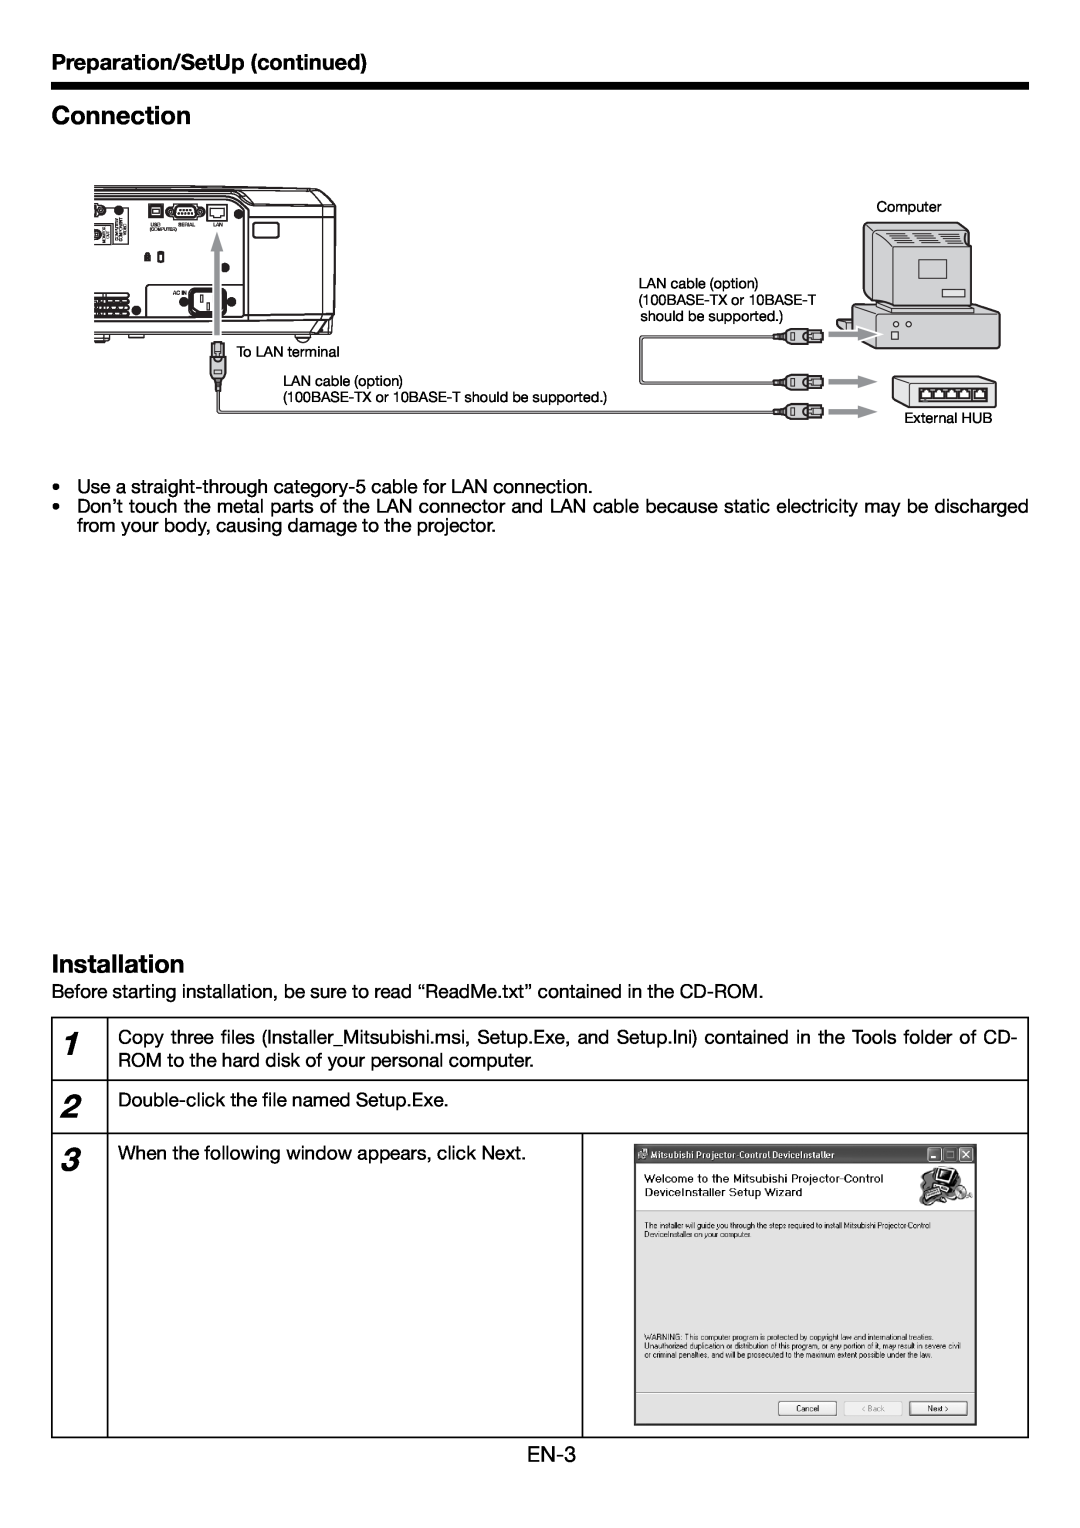 Mitsubishi Electronics HL650U user manual Connection, Installation, Preparation/SetUp continued, EN-3 